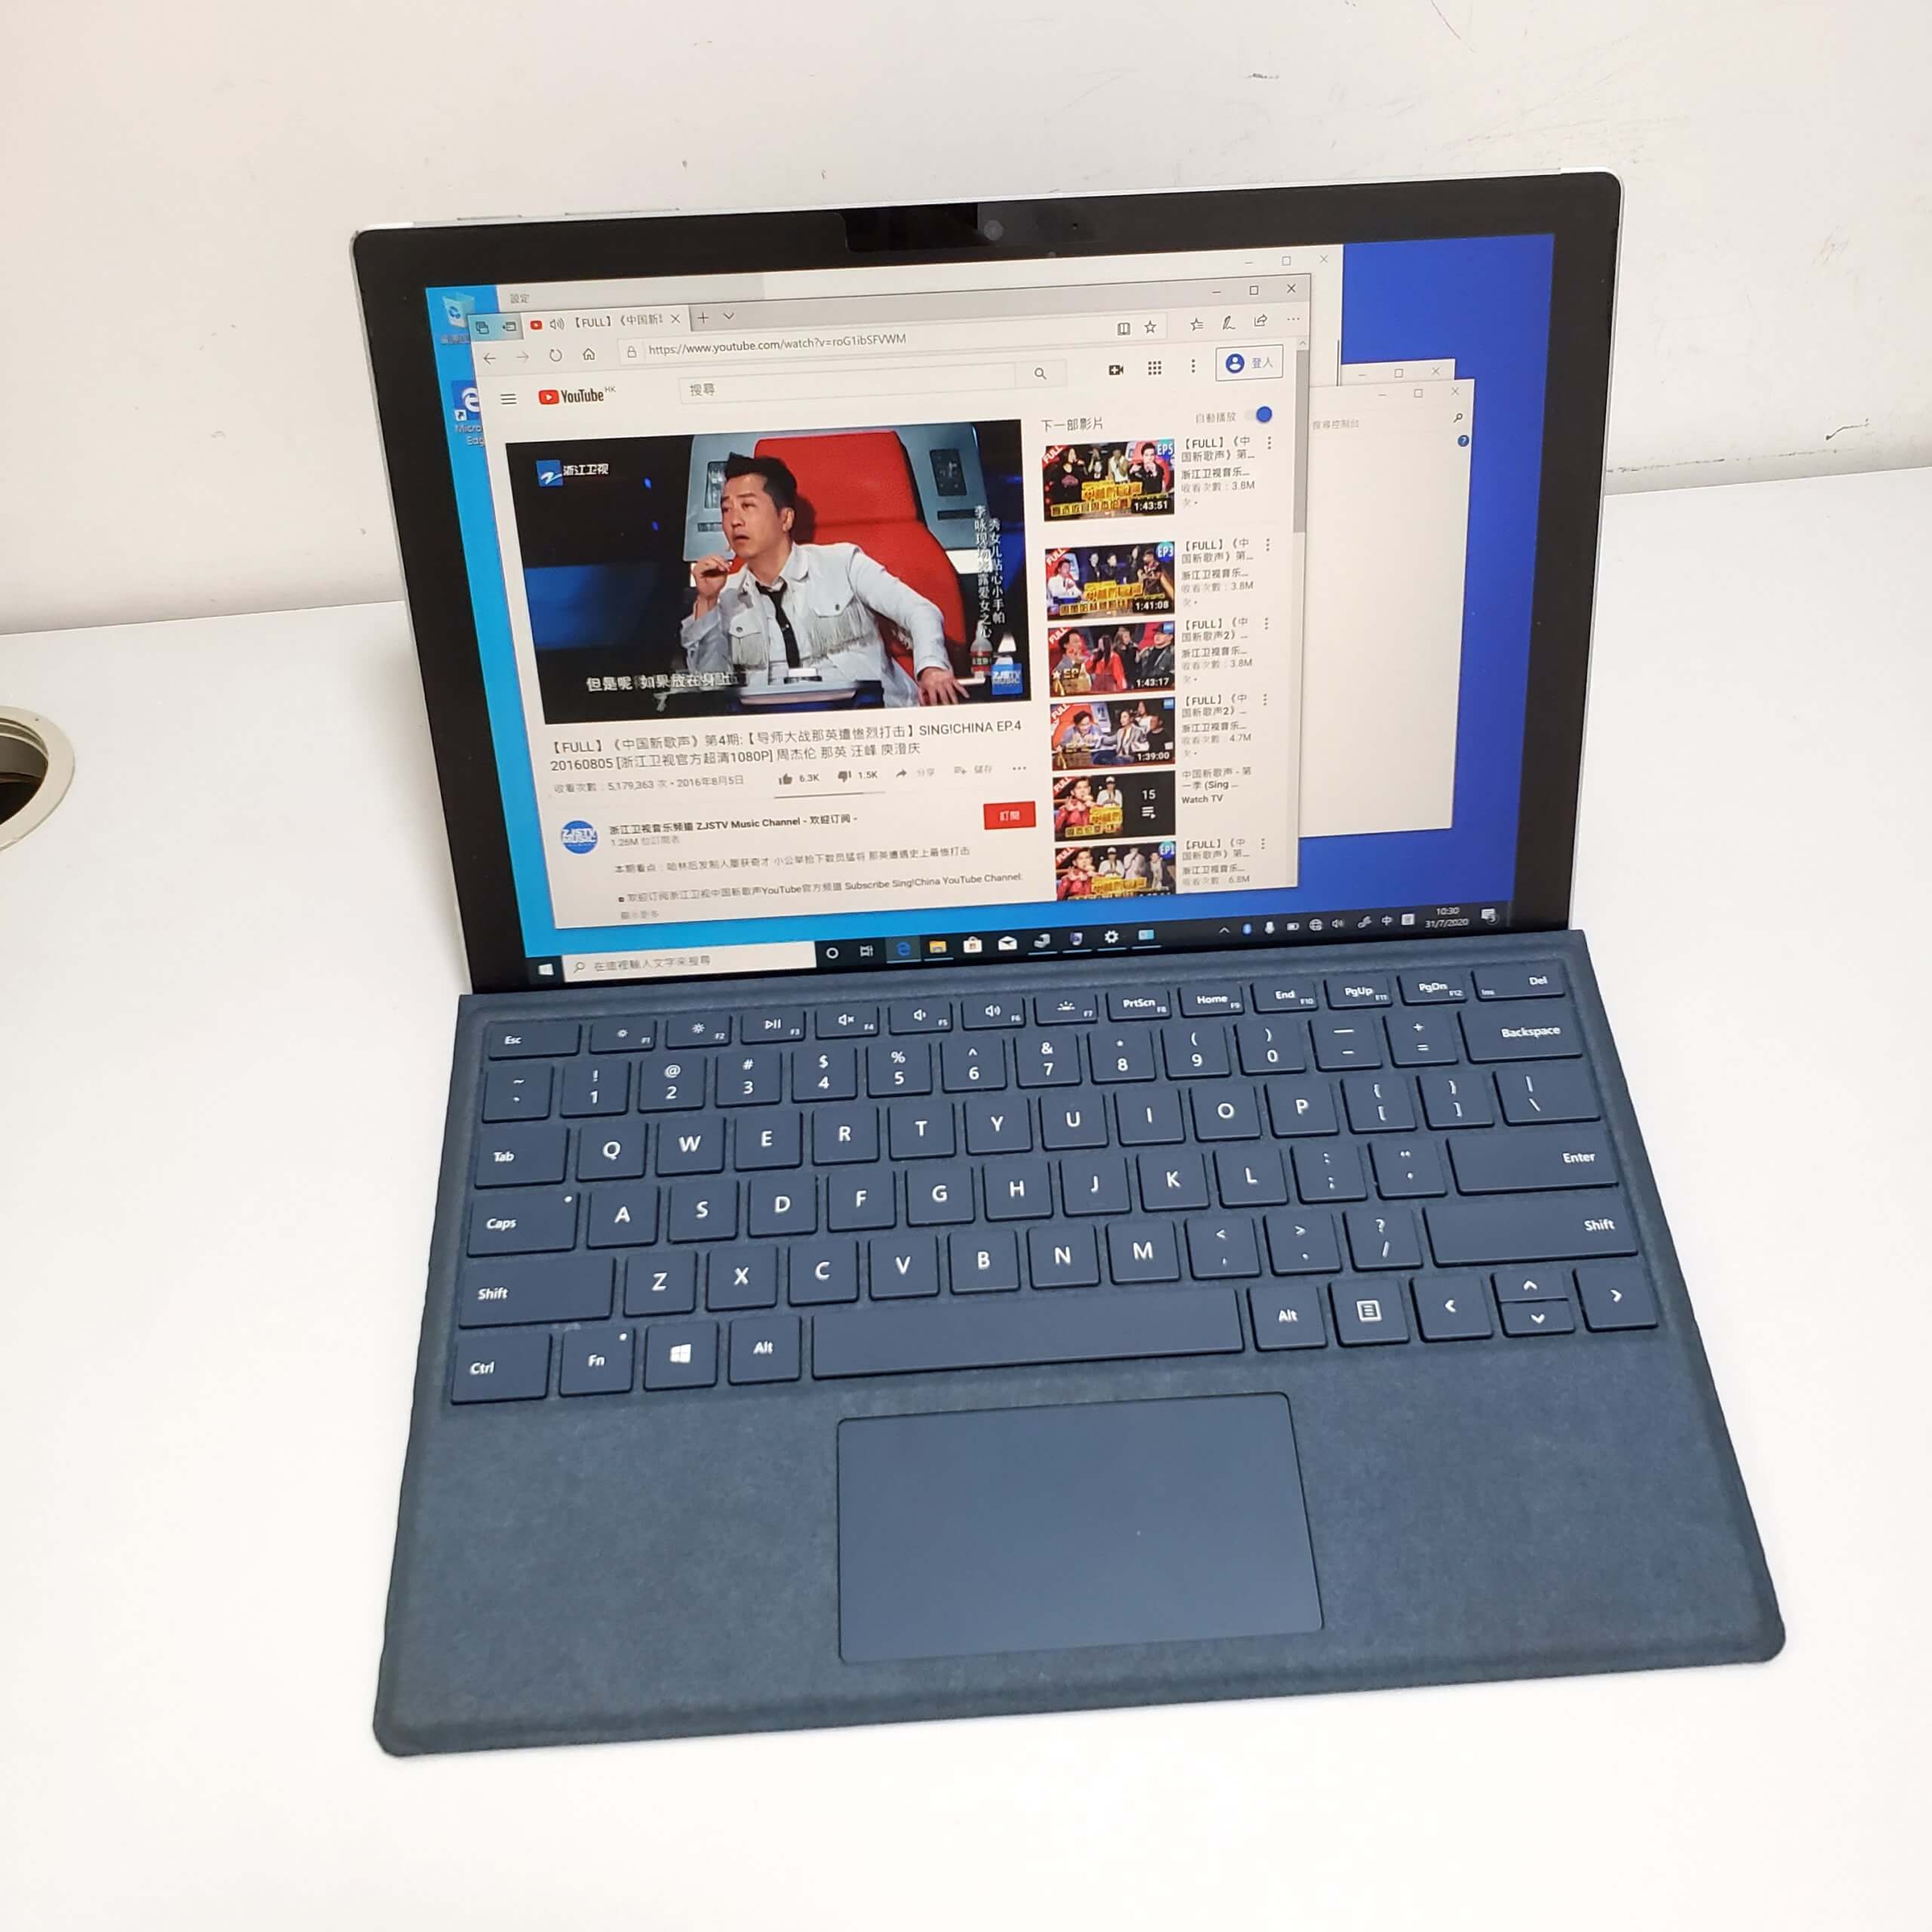 出售二手Surface Pro 5 Core i7 8G 256G SSD 12.3 " Touch Mon 跟Keyboard 保護套(已